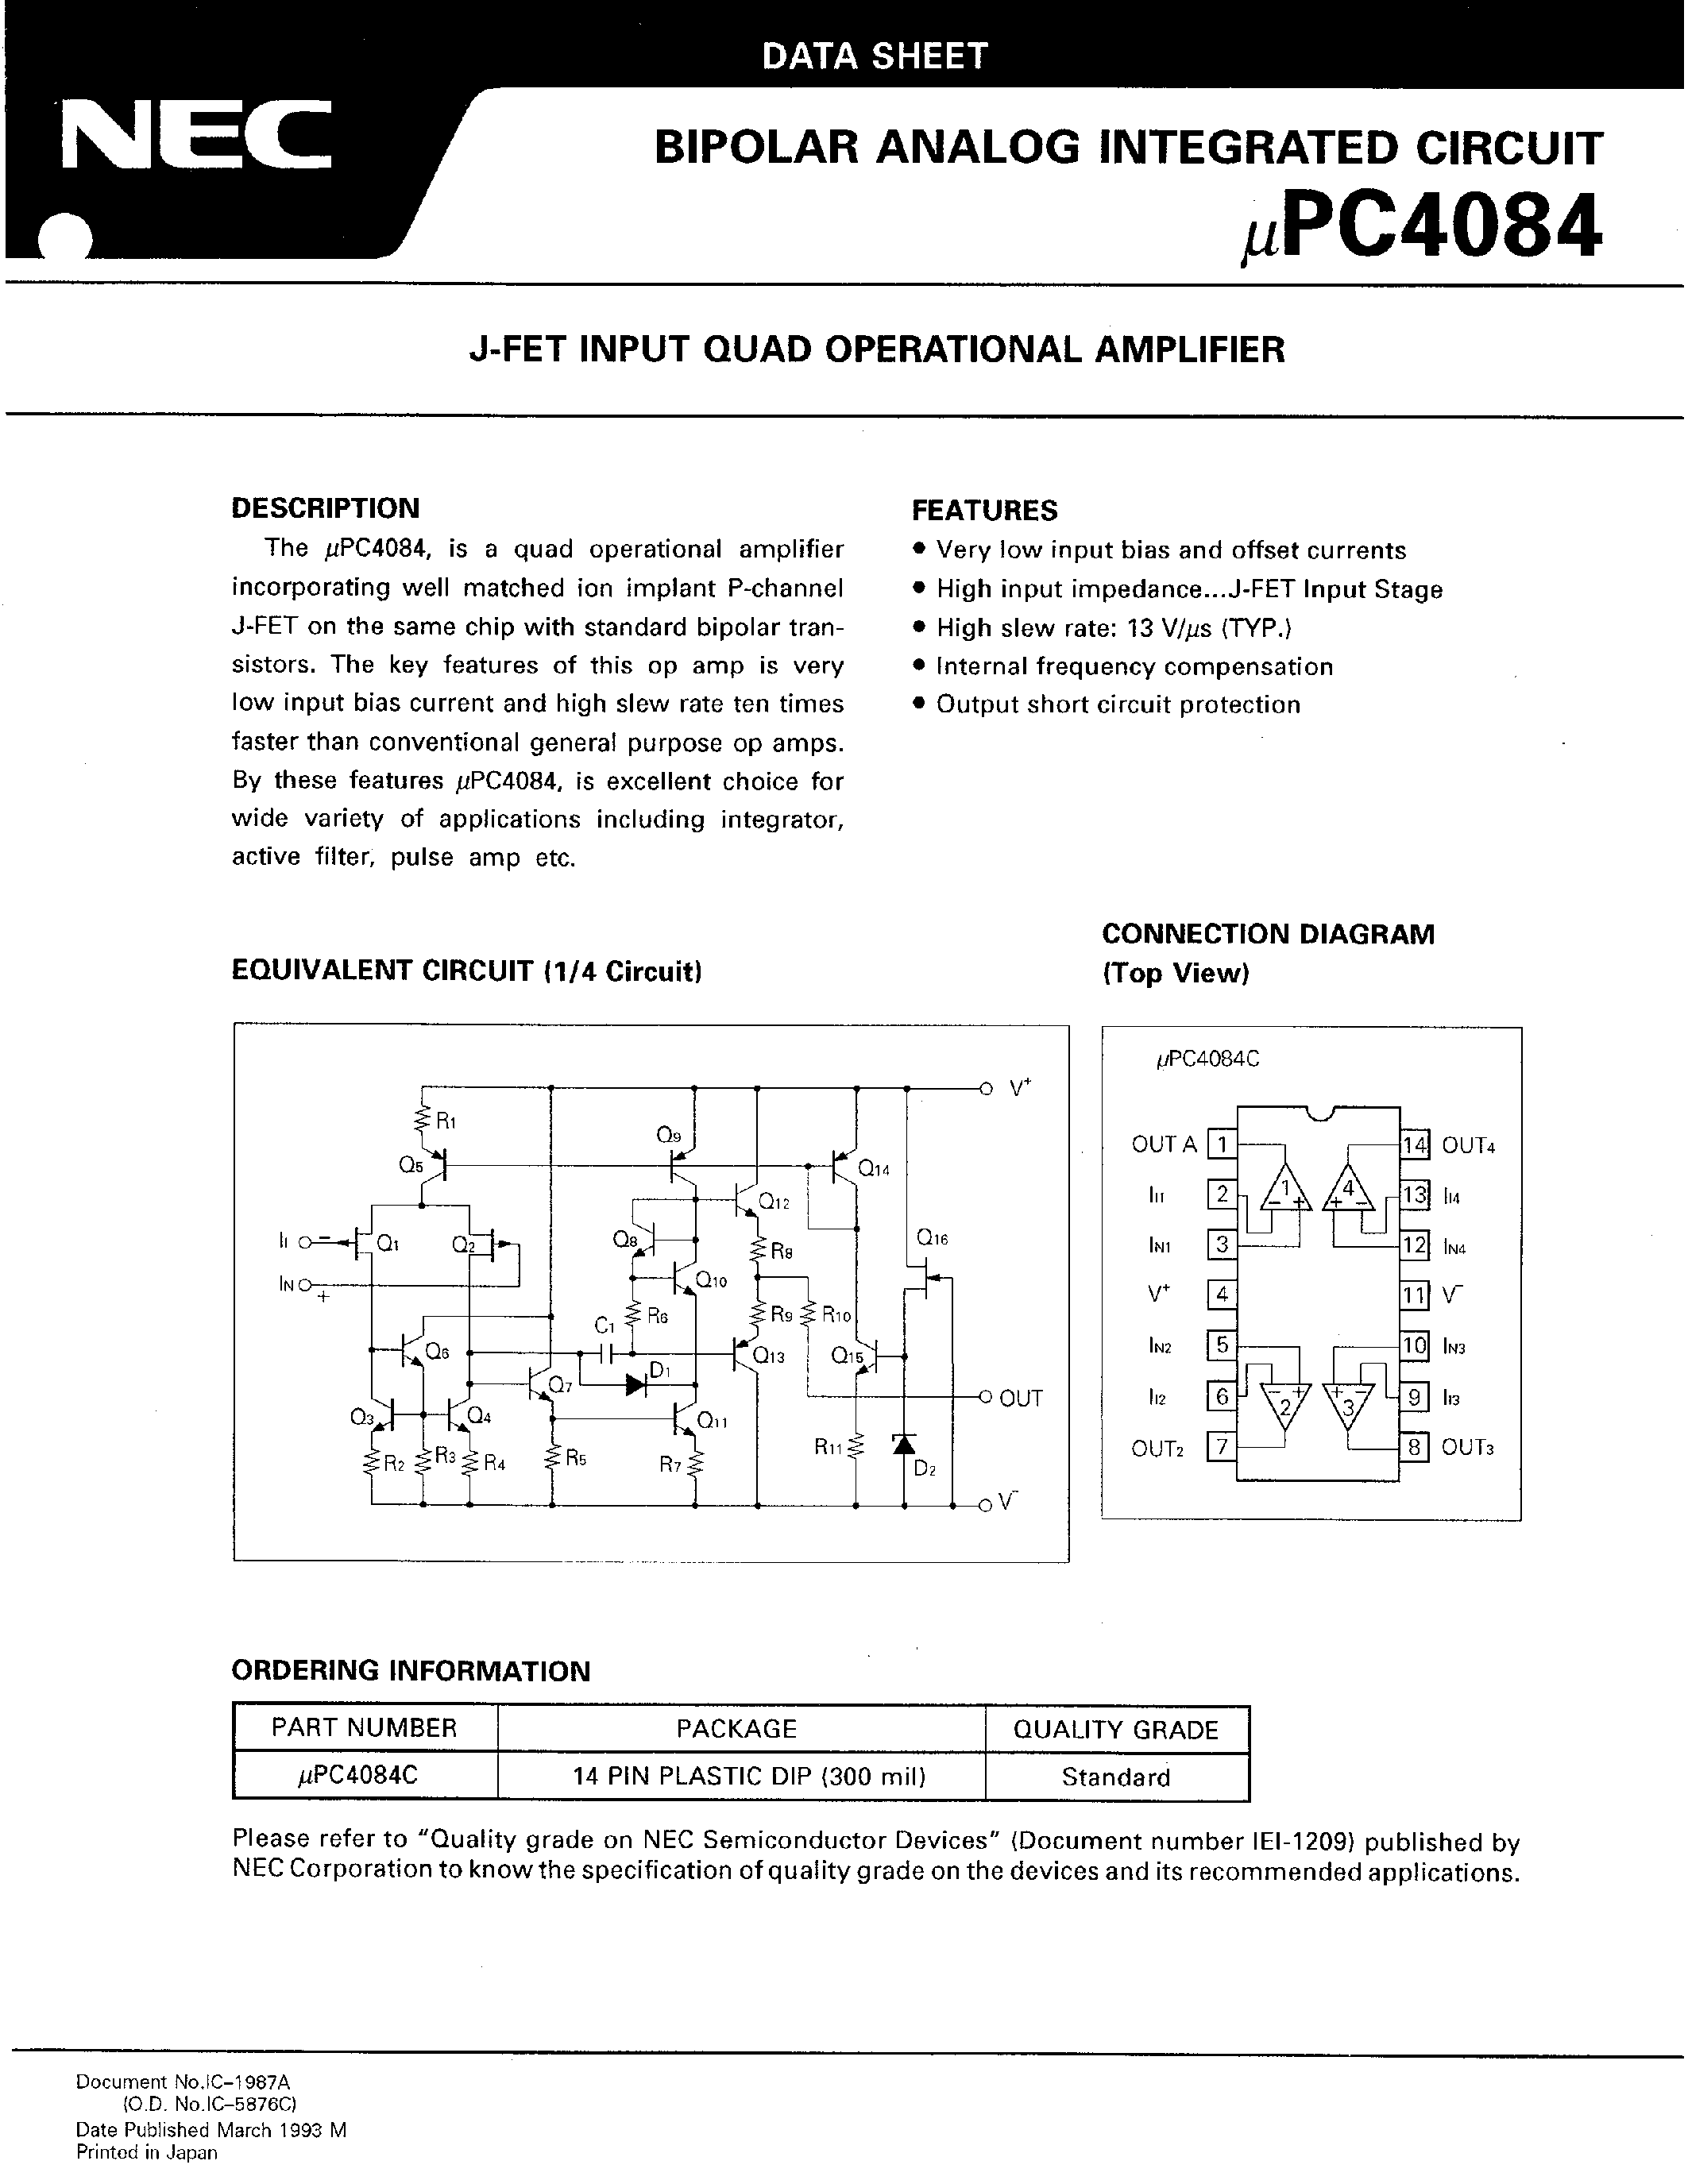 Datasheet UPC4084C - J-FET INPUT QUAD OPERATIONAL AMPLIFIER page 1